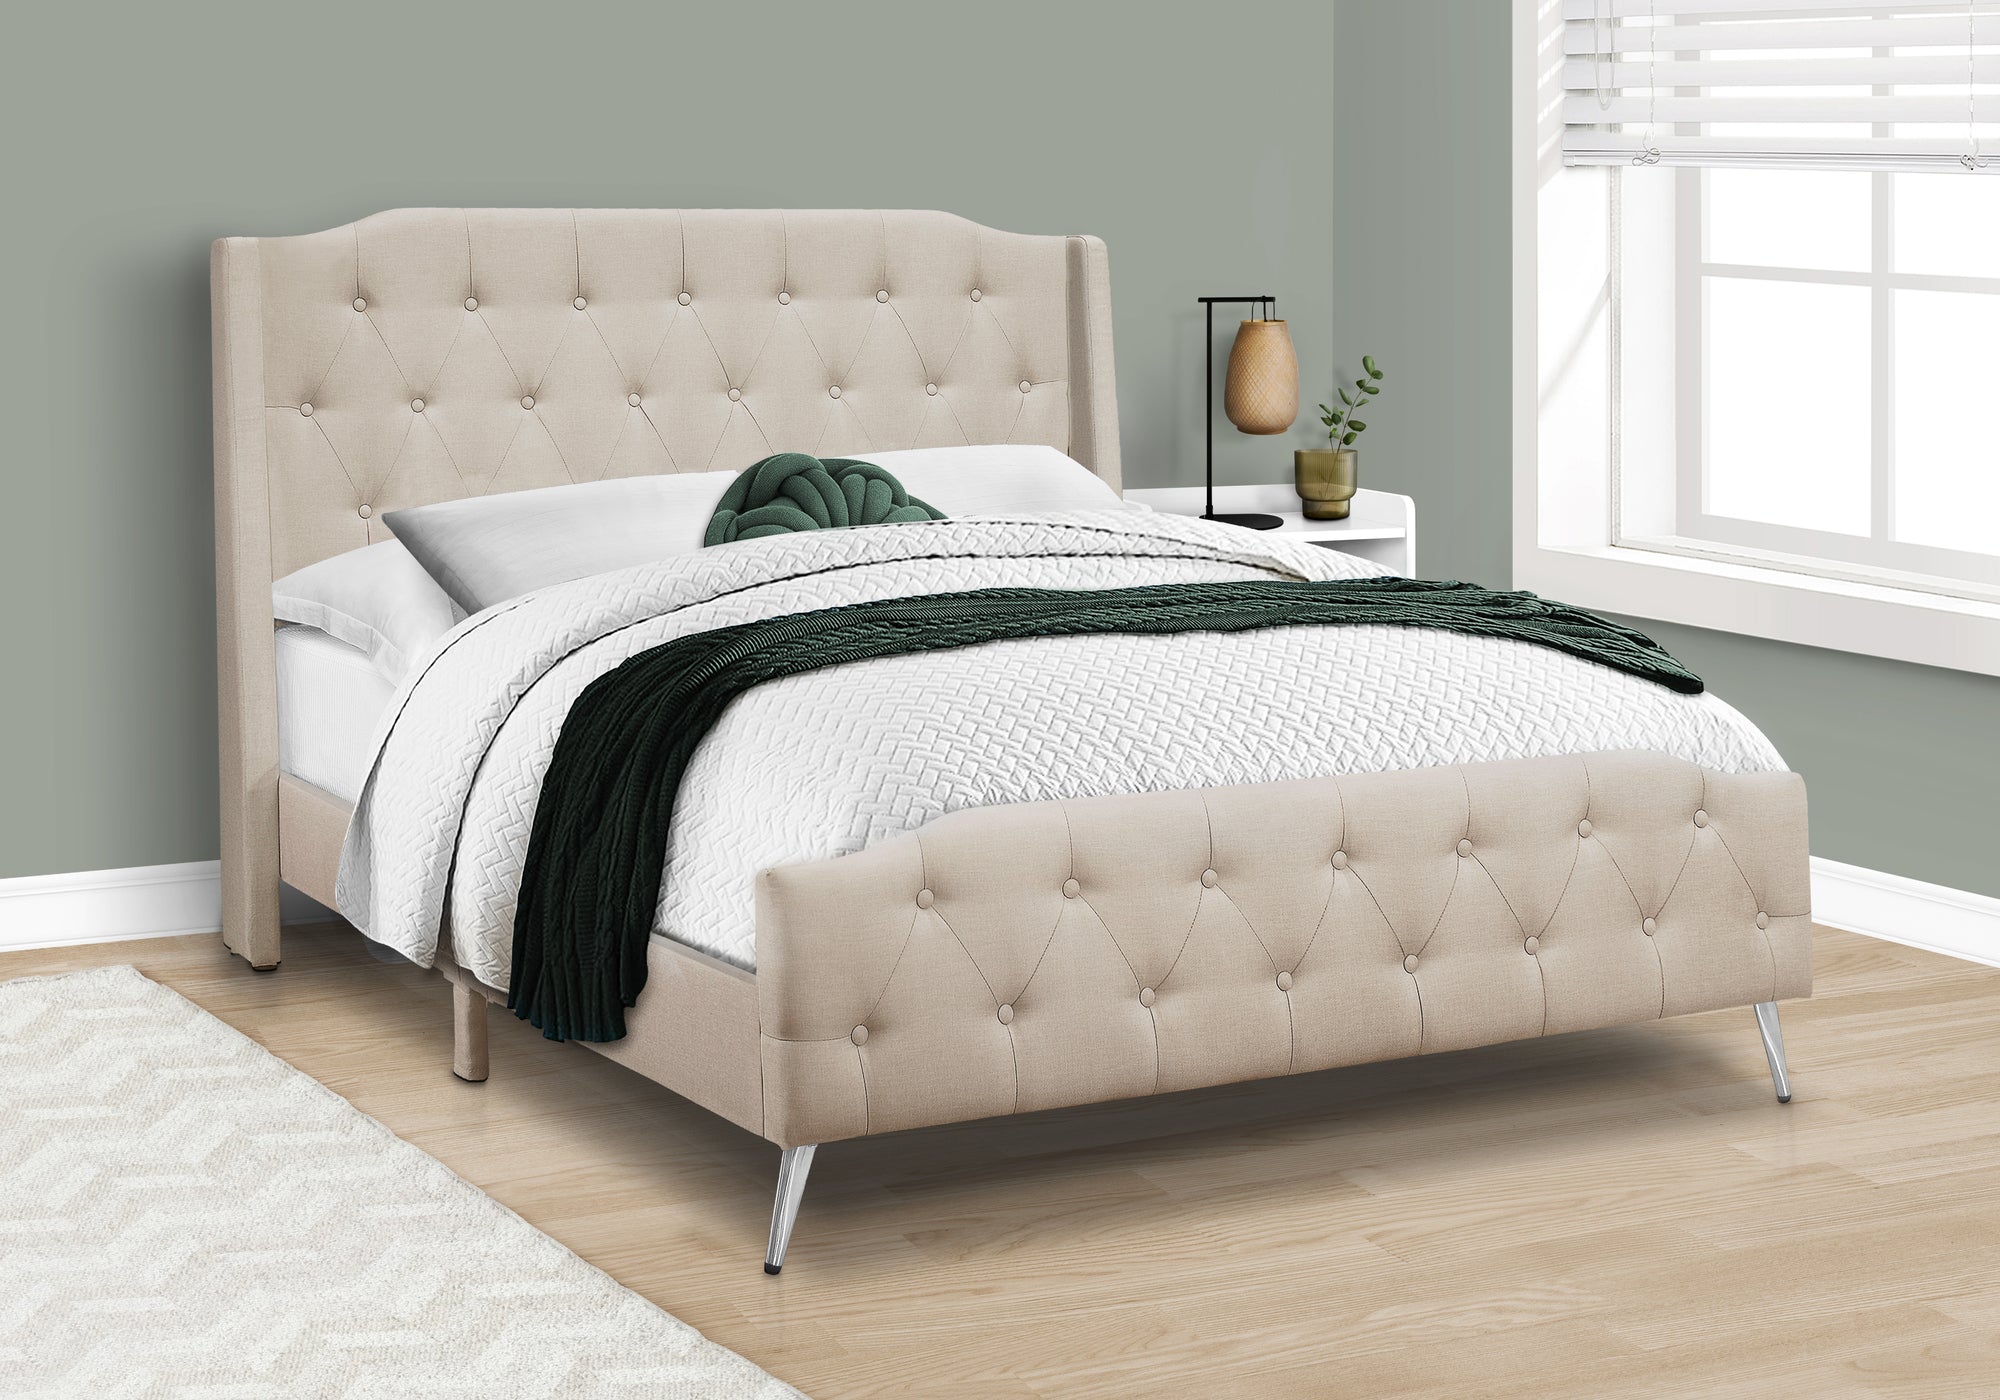 MN-956046Q    Bed, Queen Size, Bedroom, Upholstered, Beige Linen Look, Chrome Metal Legs, Transitional